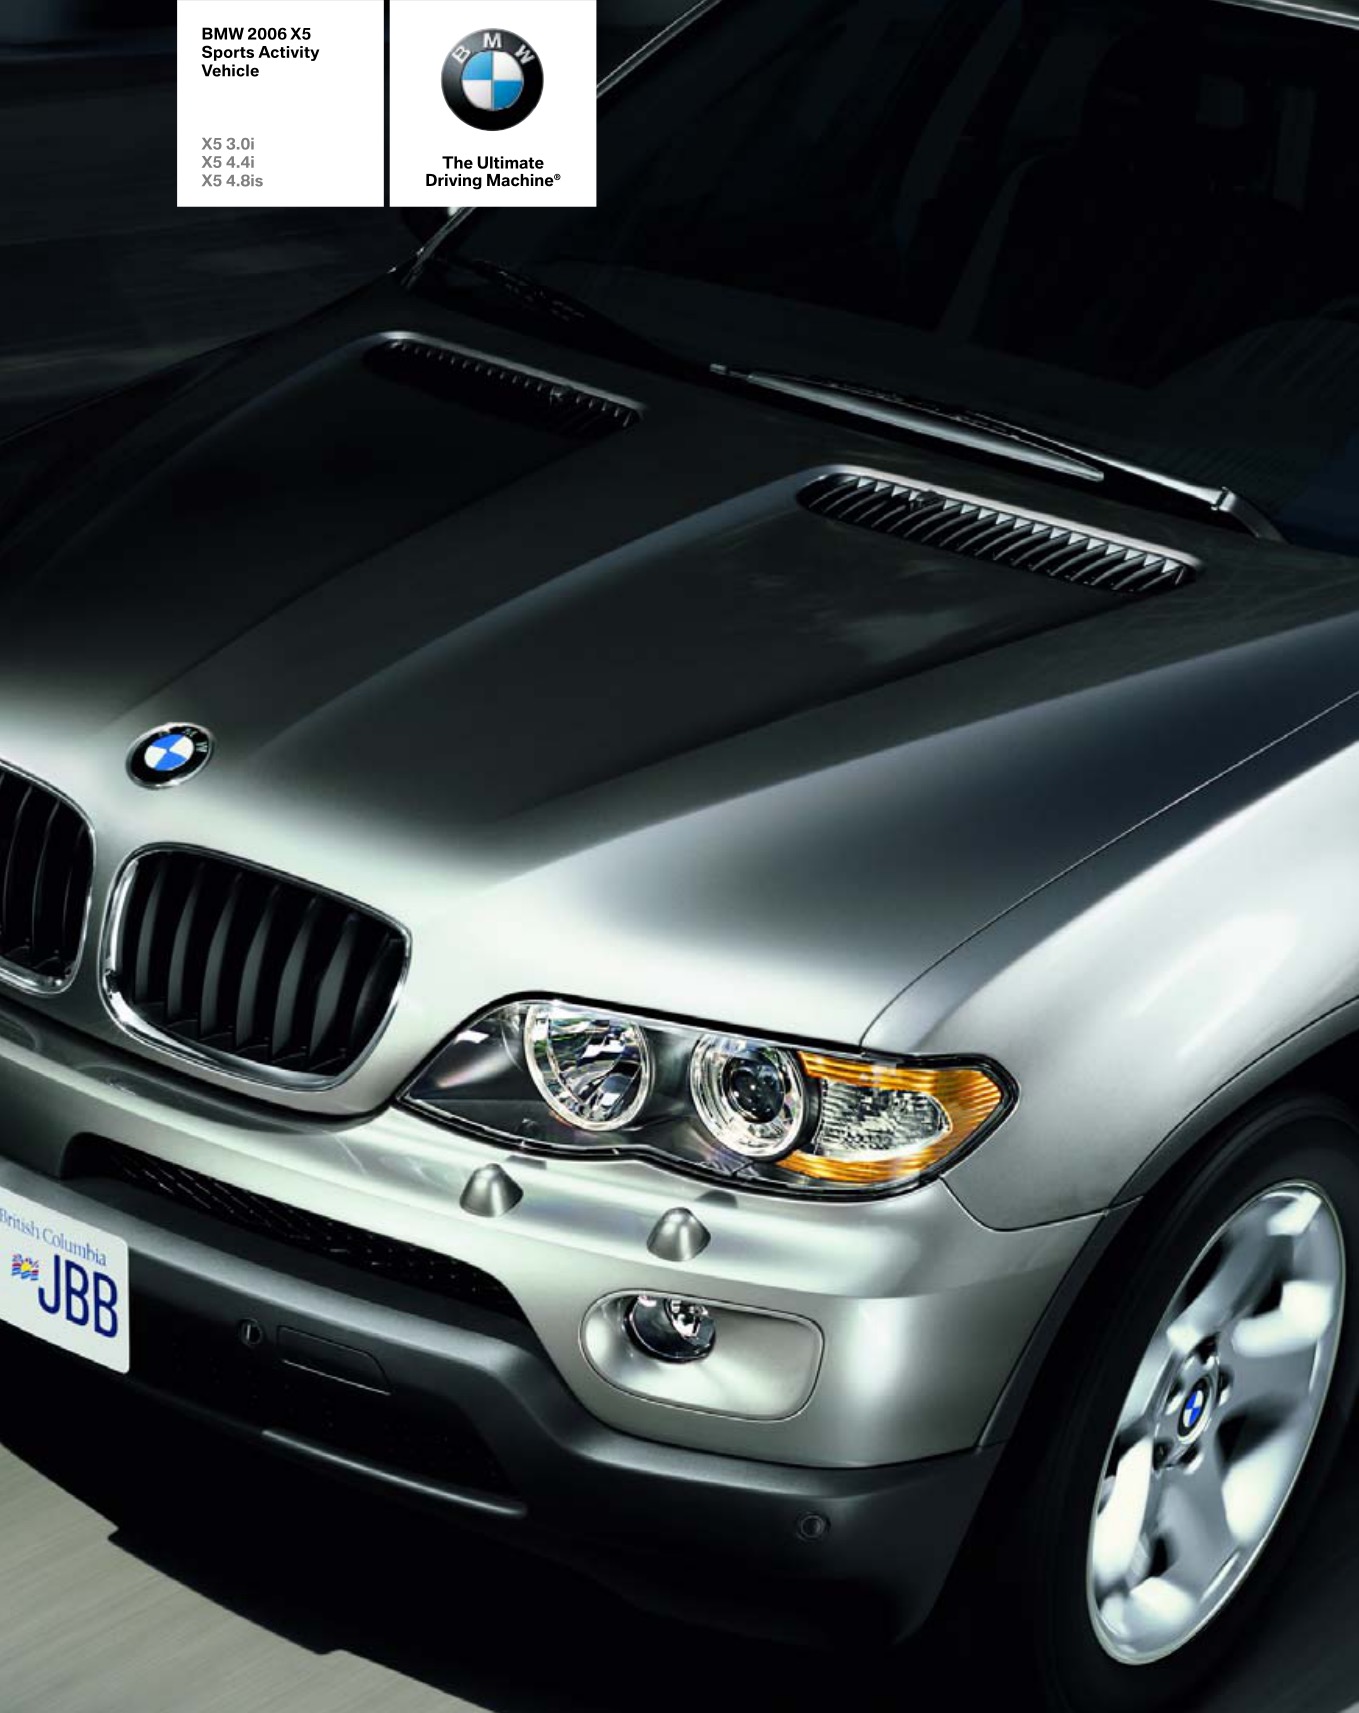 2006 BMW X5 Brochure